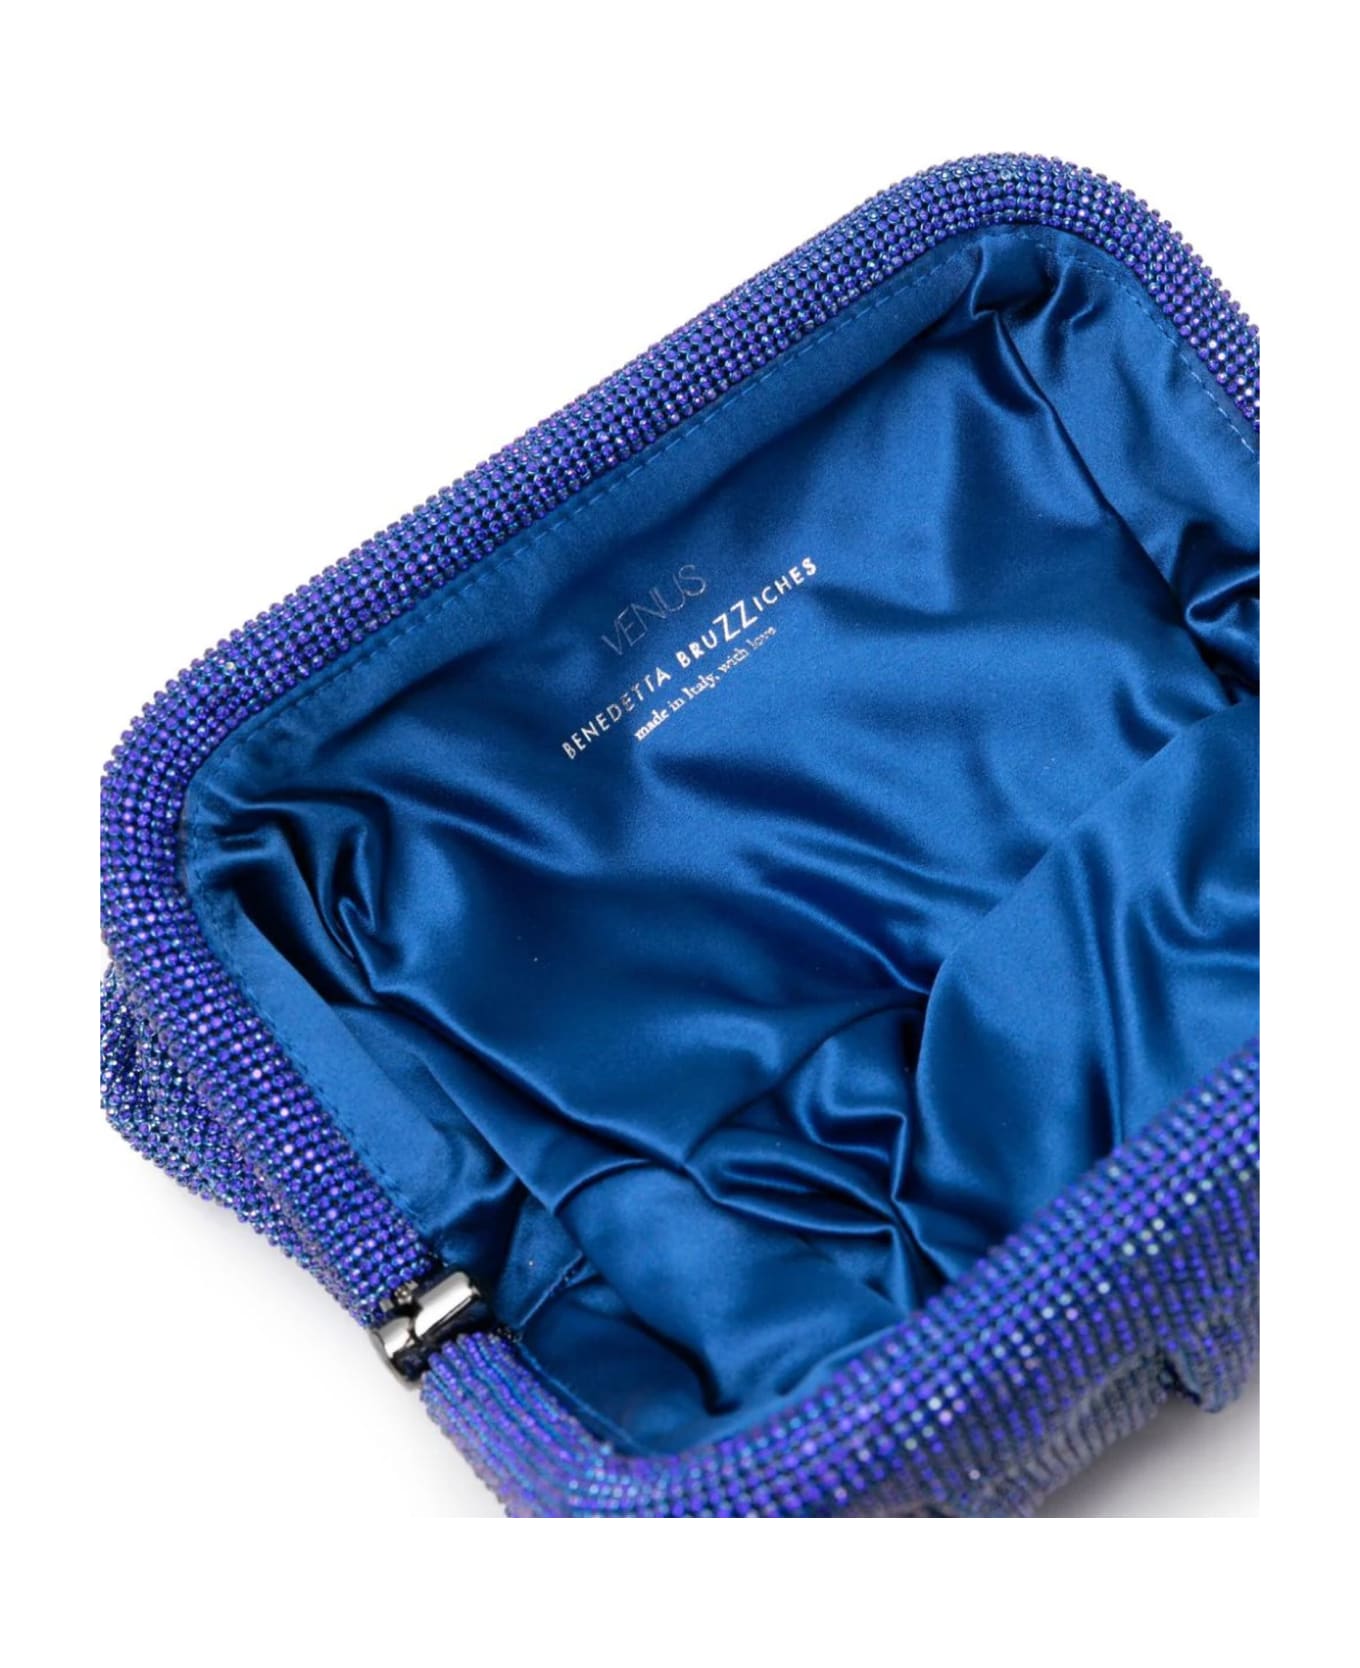 Benedetta Bruzziches Blue Venus La Grande Crystal Clutch Bag - Blue クラッチバッグ